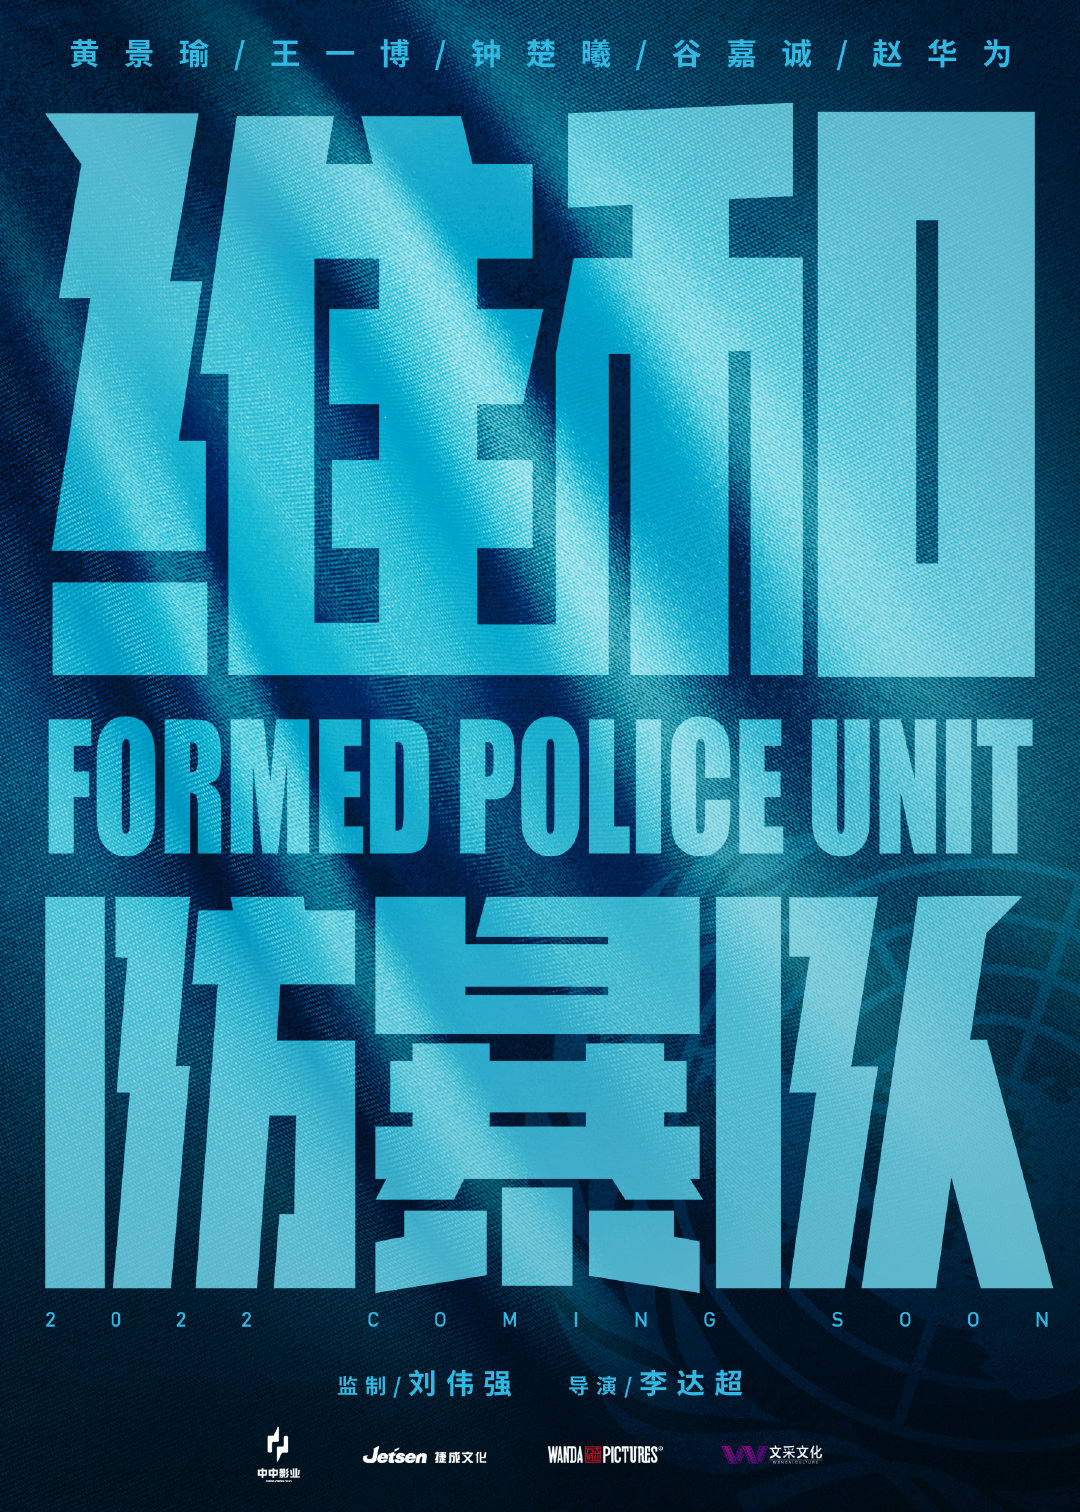 维和防暴队 - Formed Police Unit